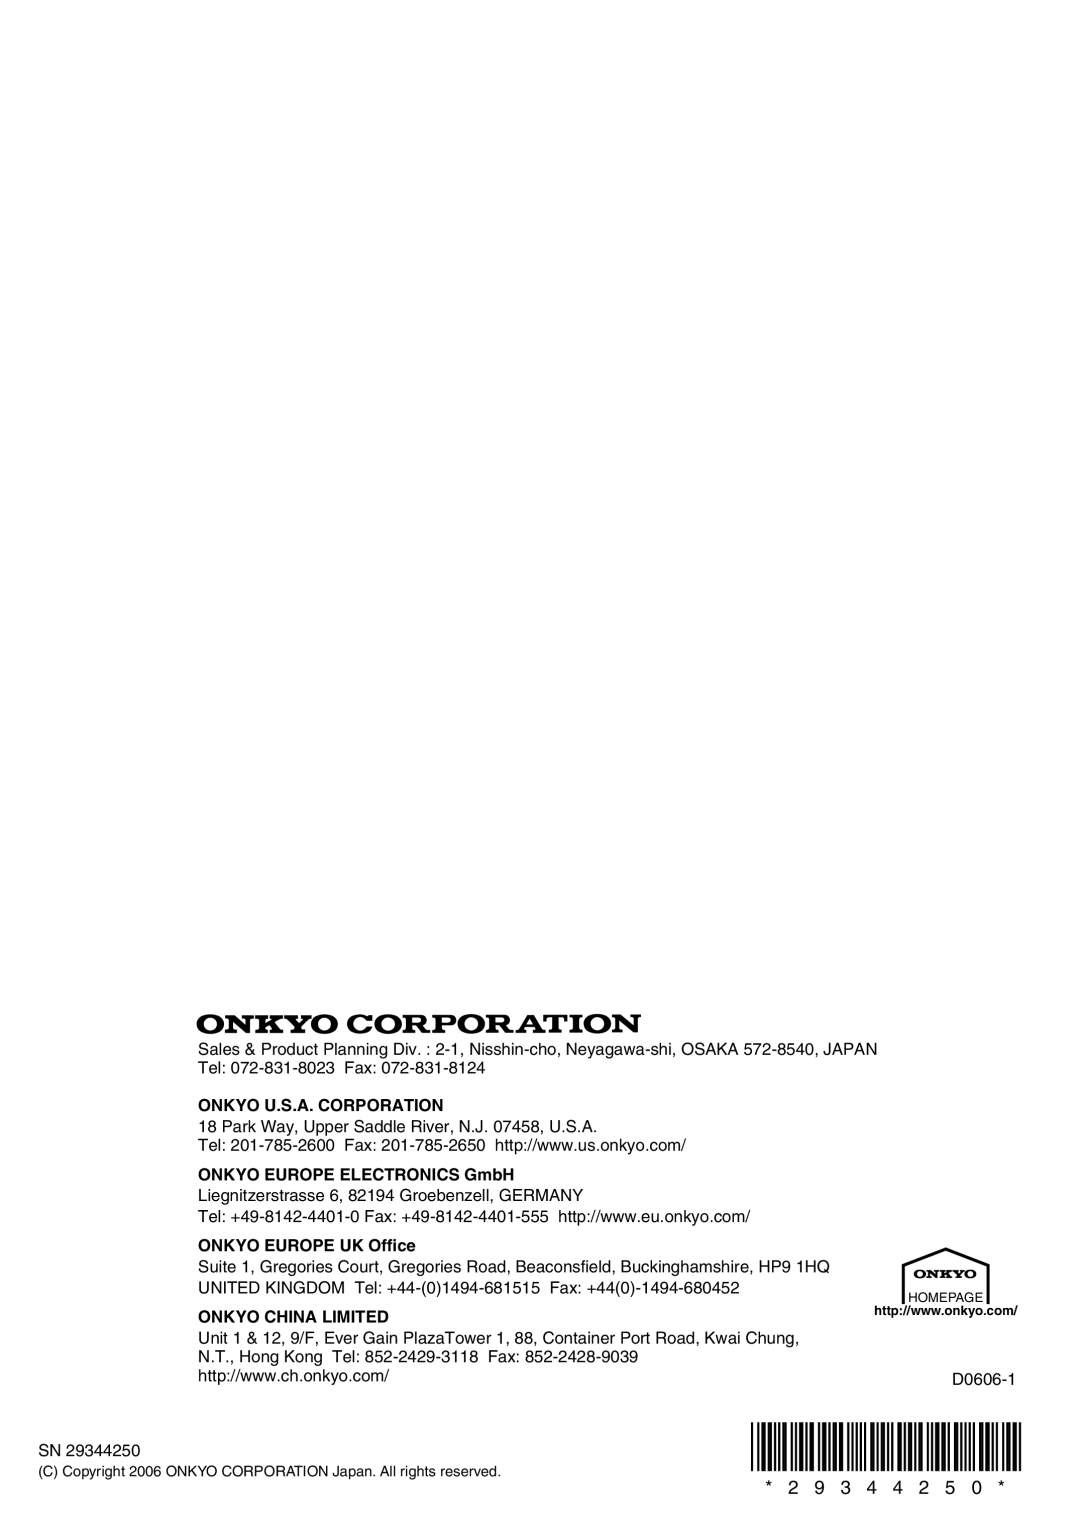 Onkyo HT-R640 Onkyo U.S.A. Corporation, ONKYO EUROPE ELECTRONICS GmbH, ONKYO EUROPE UK Office, Onkyo China Limited 